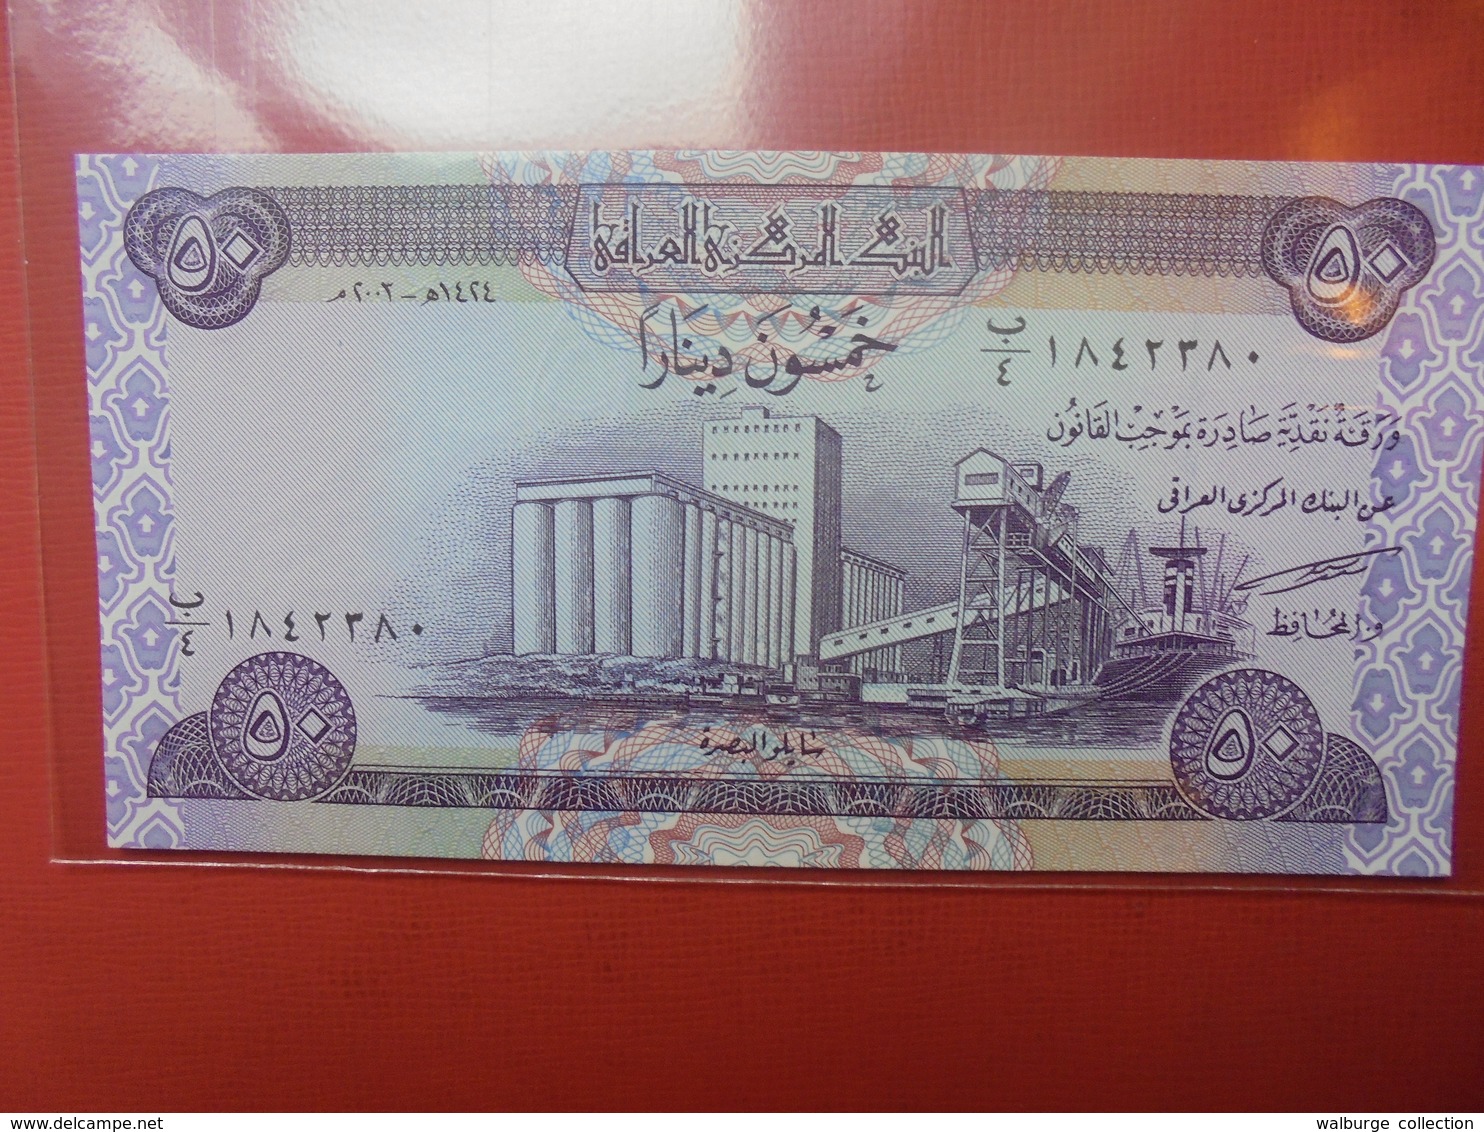 IRAQ 50 DINARS 2003 PEU CIRCULER/NEUF - Iraq